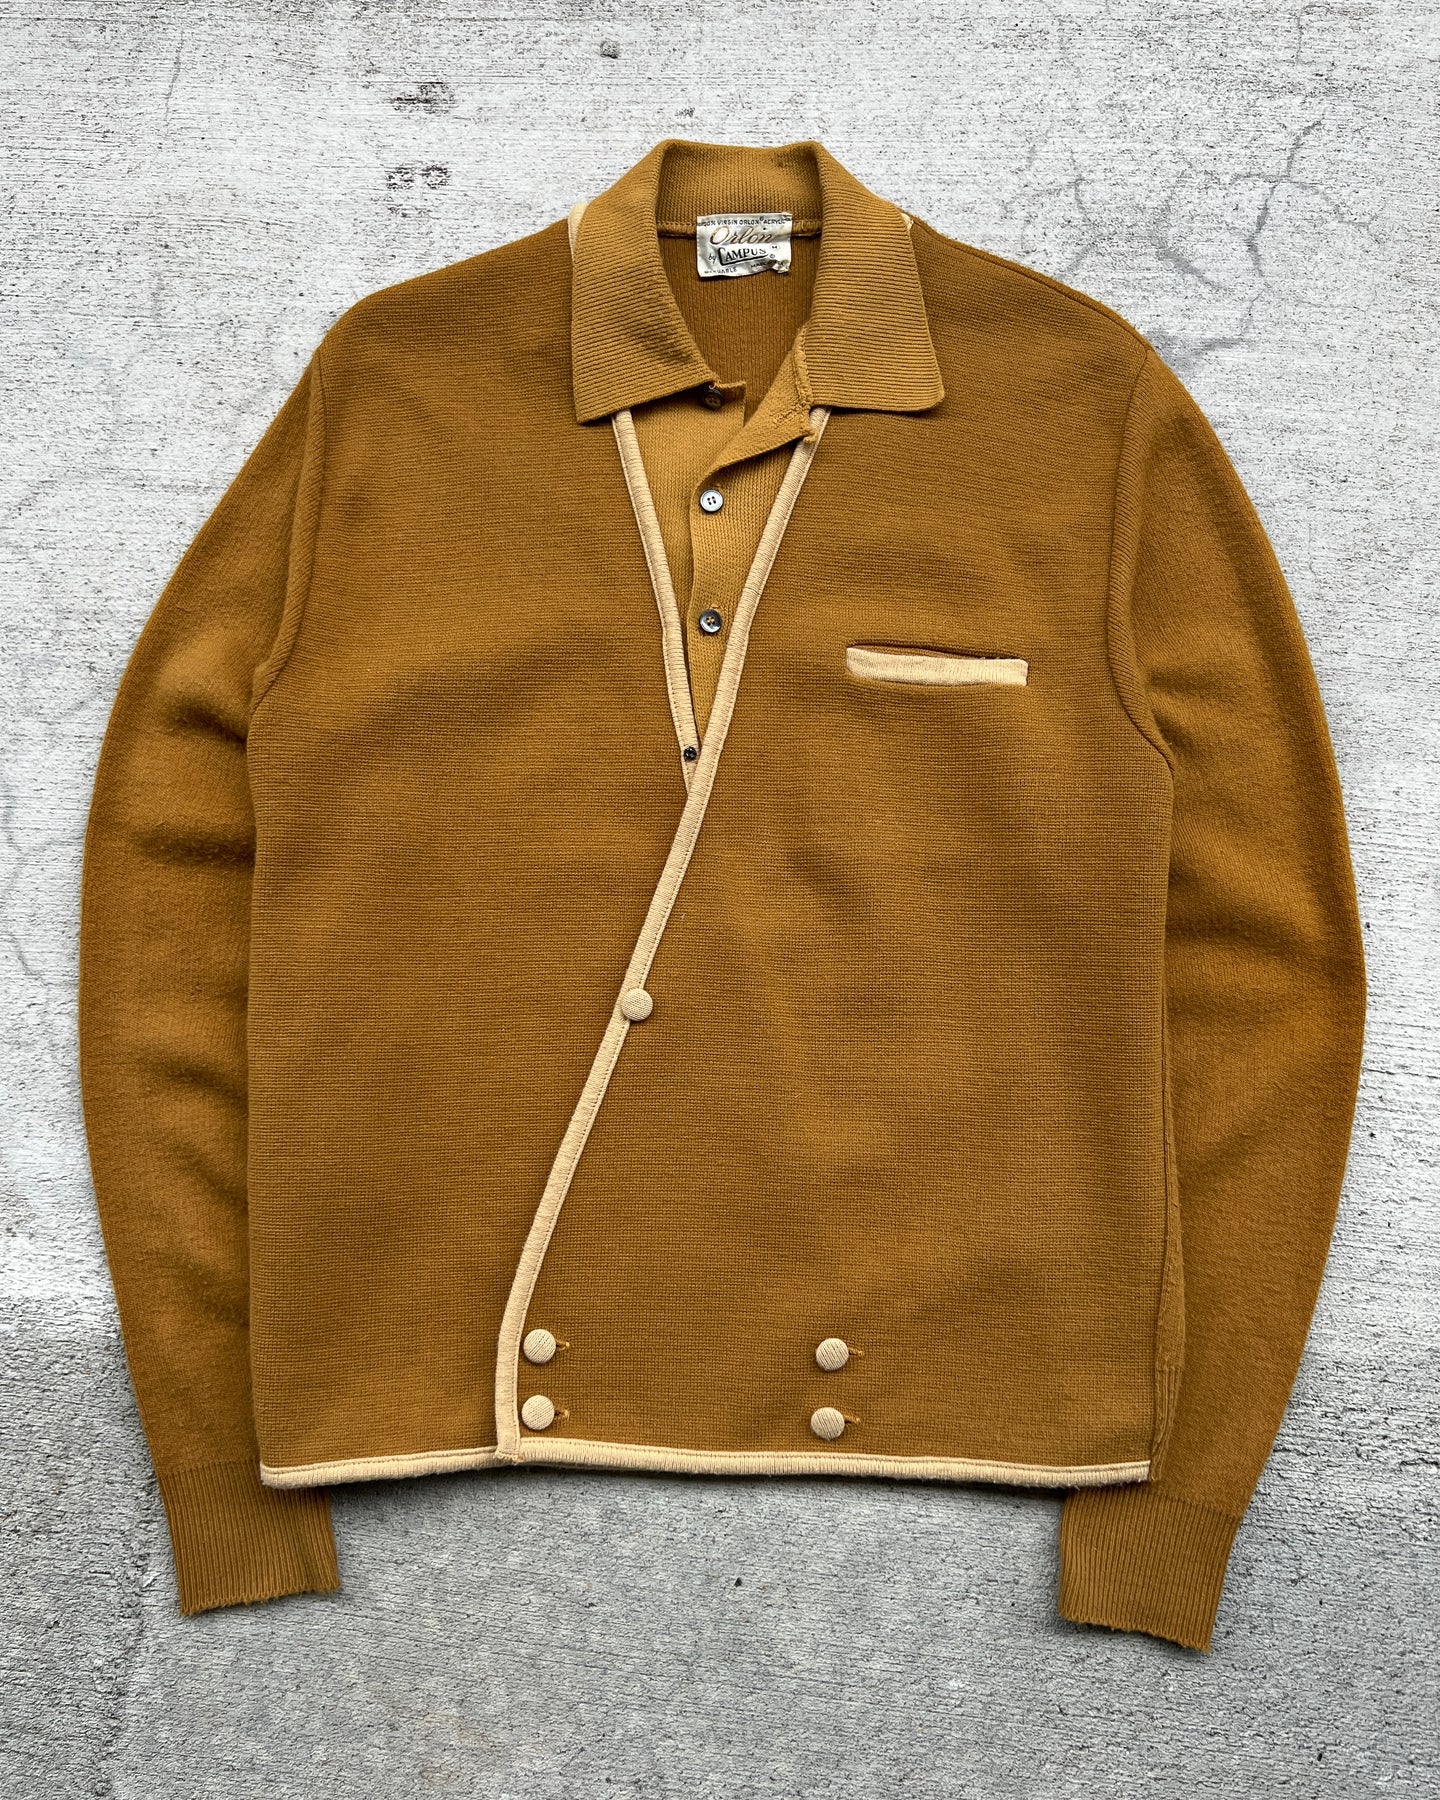 1960s Asymmetrical Collared Cardigan - Size Medium